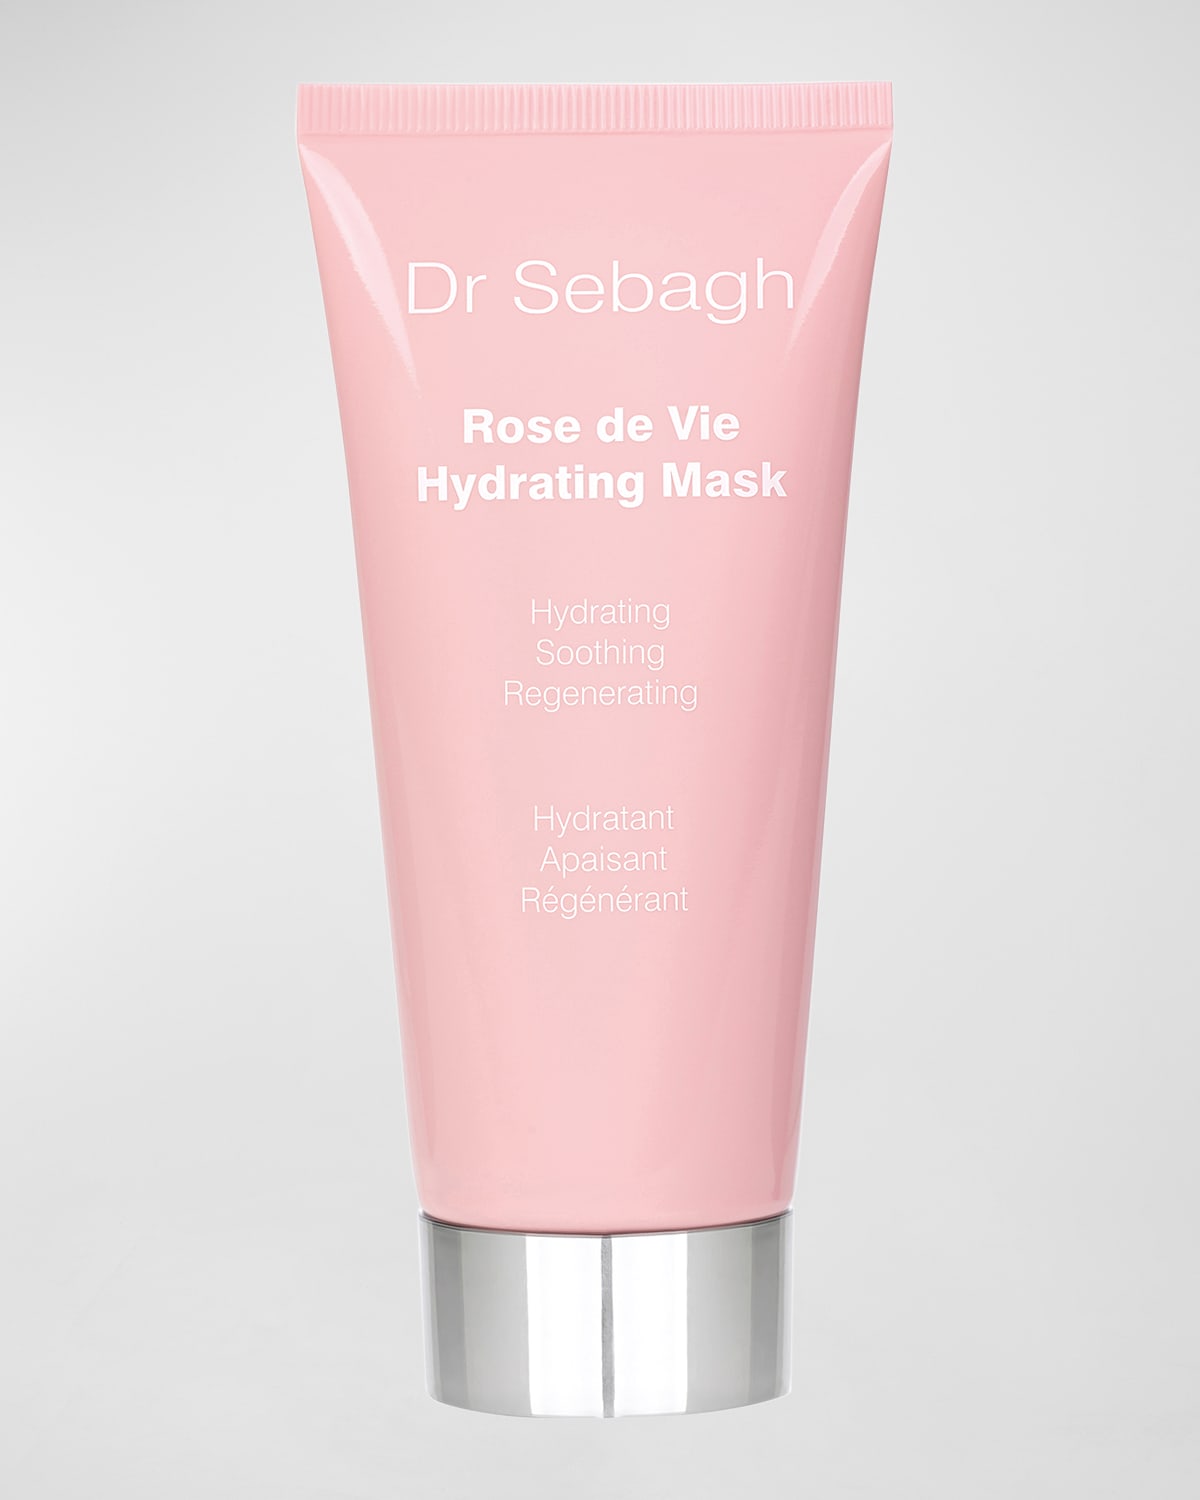 Dr Sebagh Rose de Vie Hydrating Mask